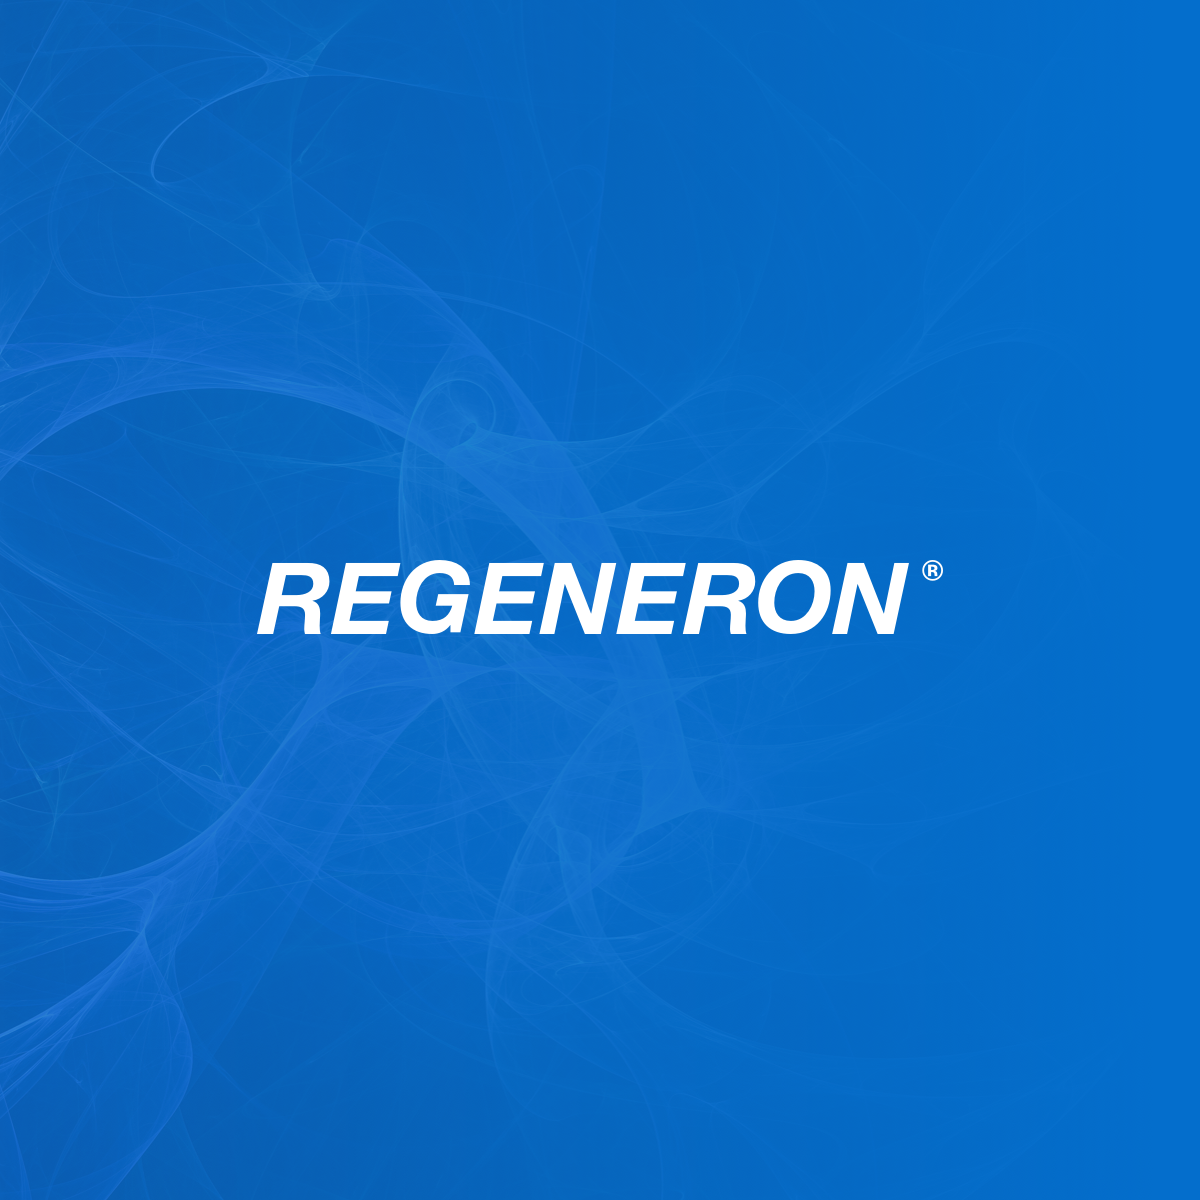 www.regeneron.com